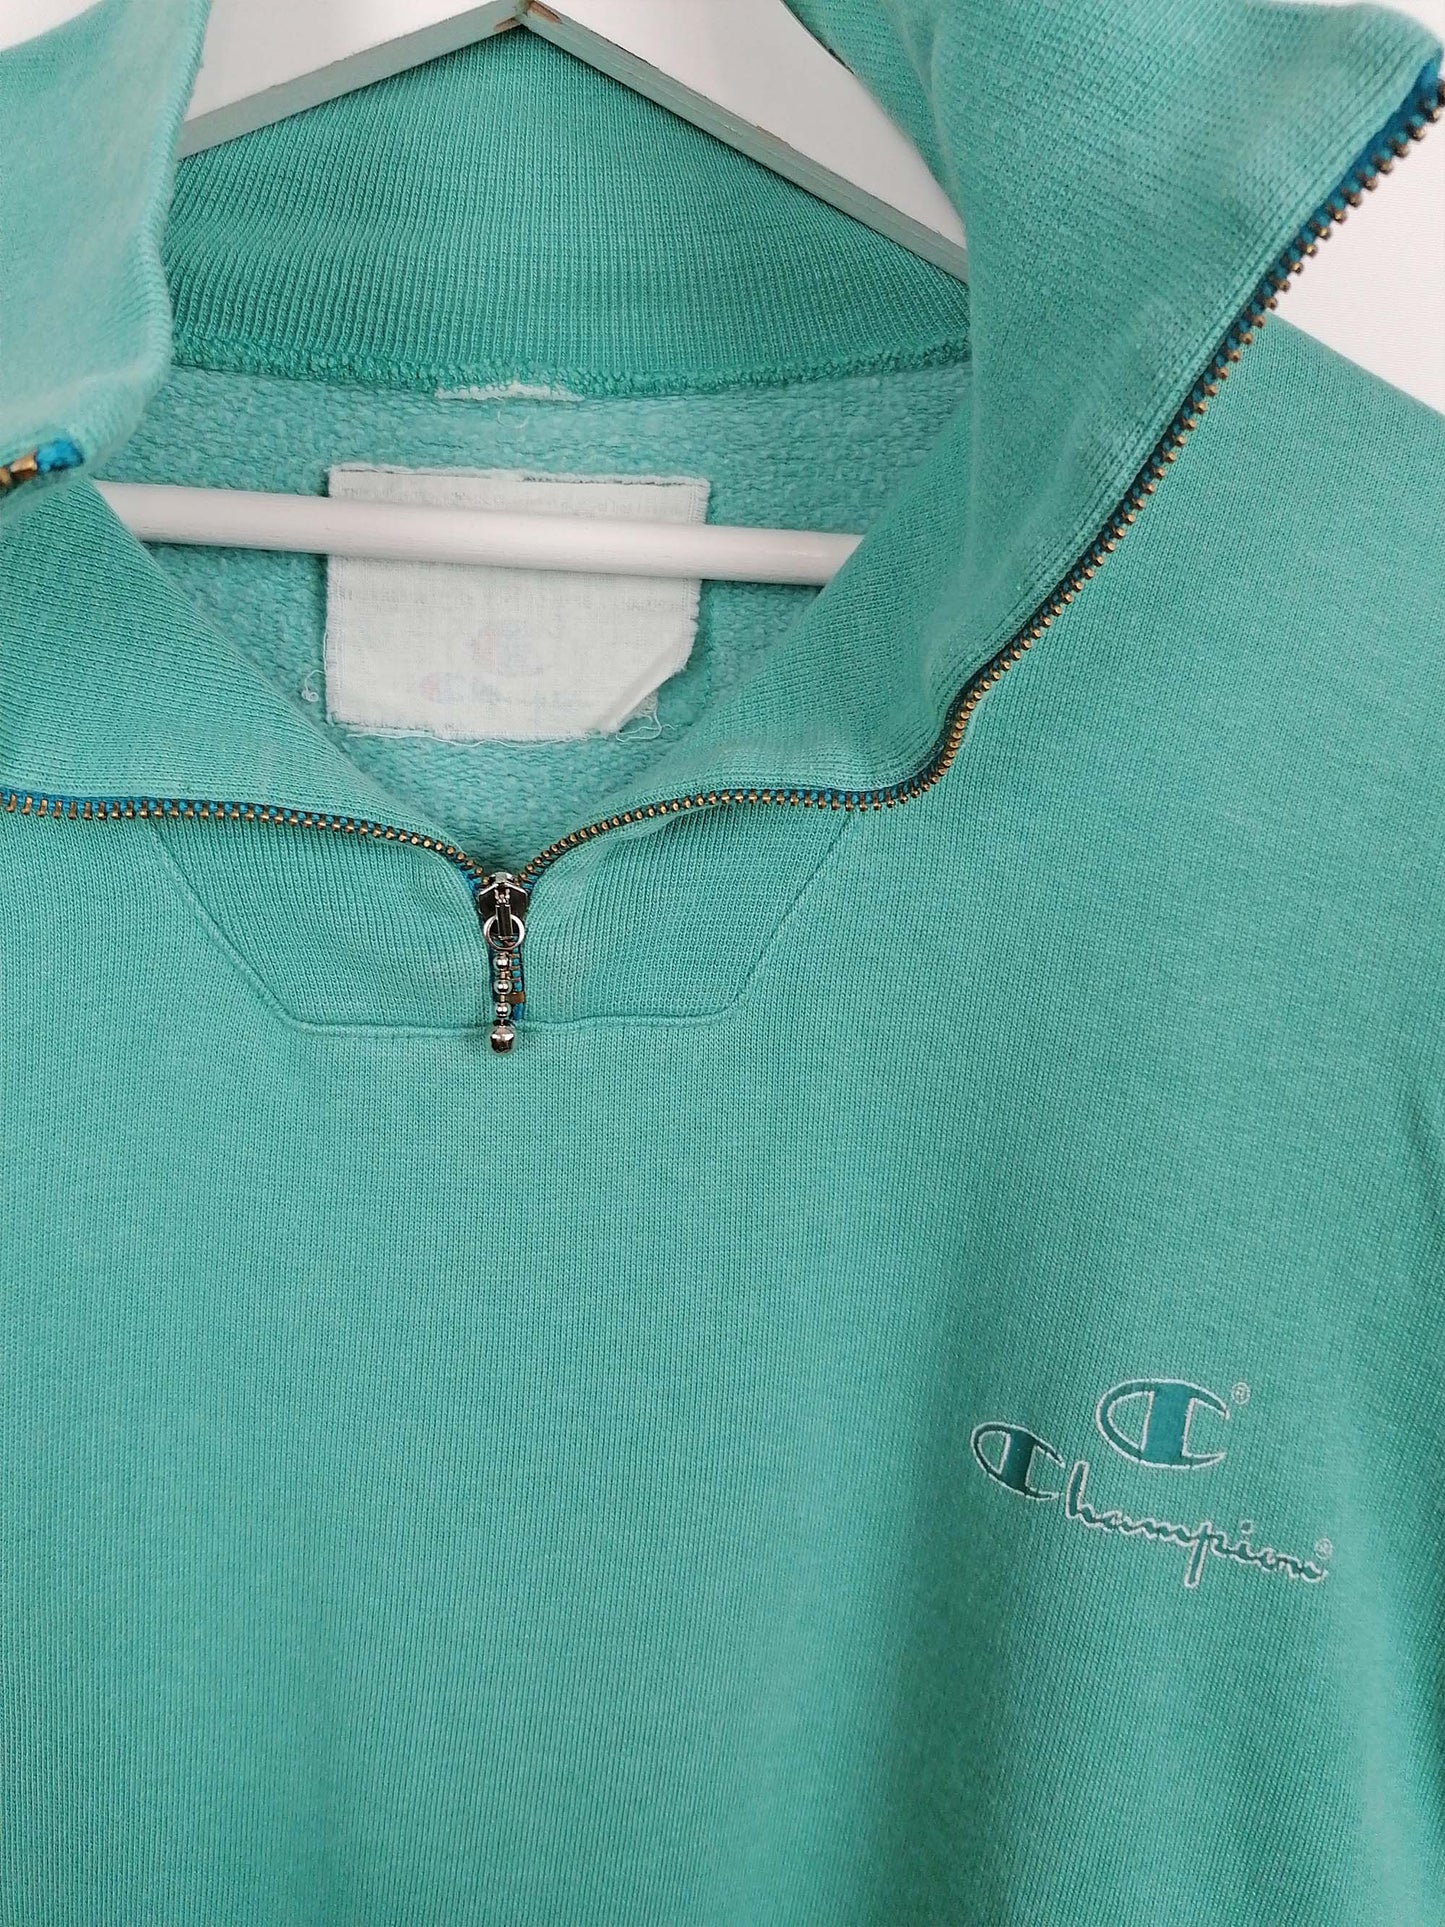 90's CHAMPION Quarter Zip Sweatshirt - size S-L